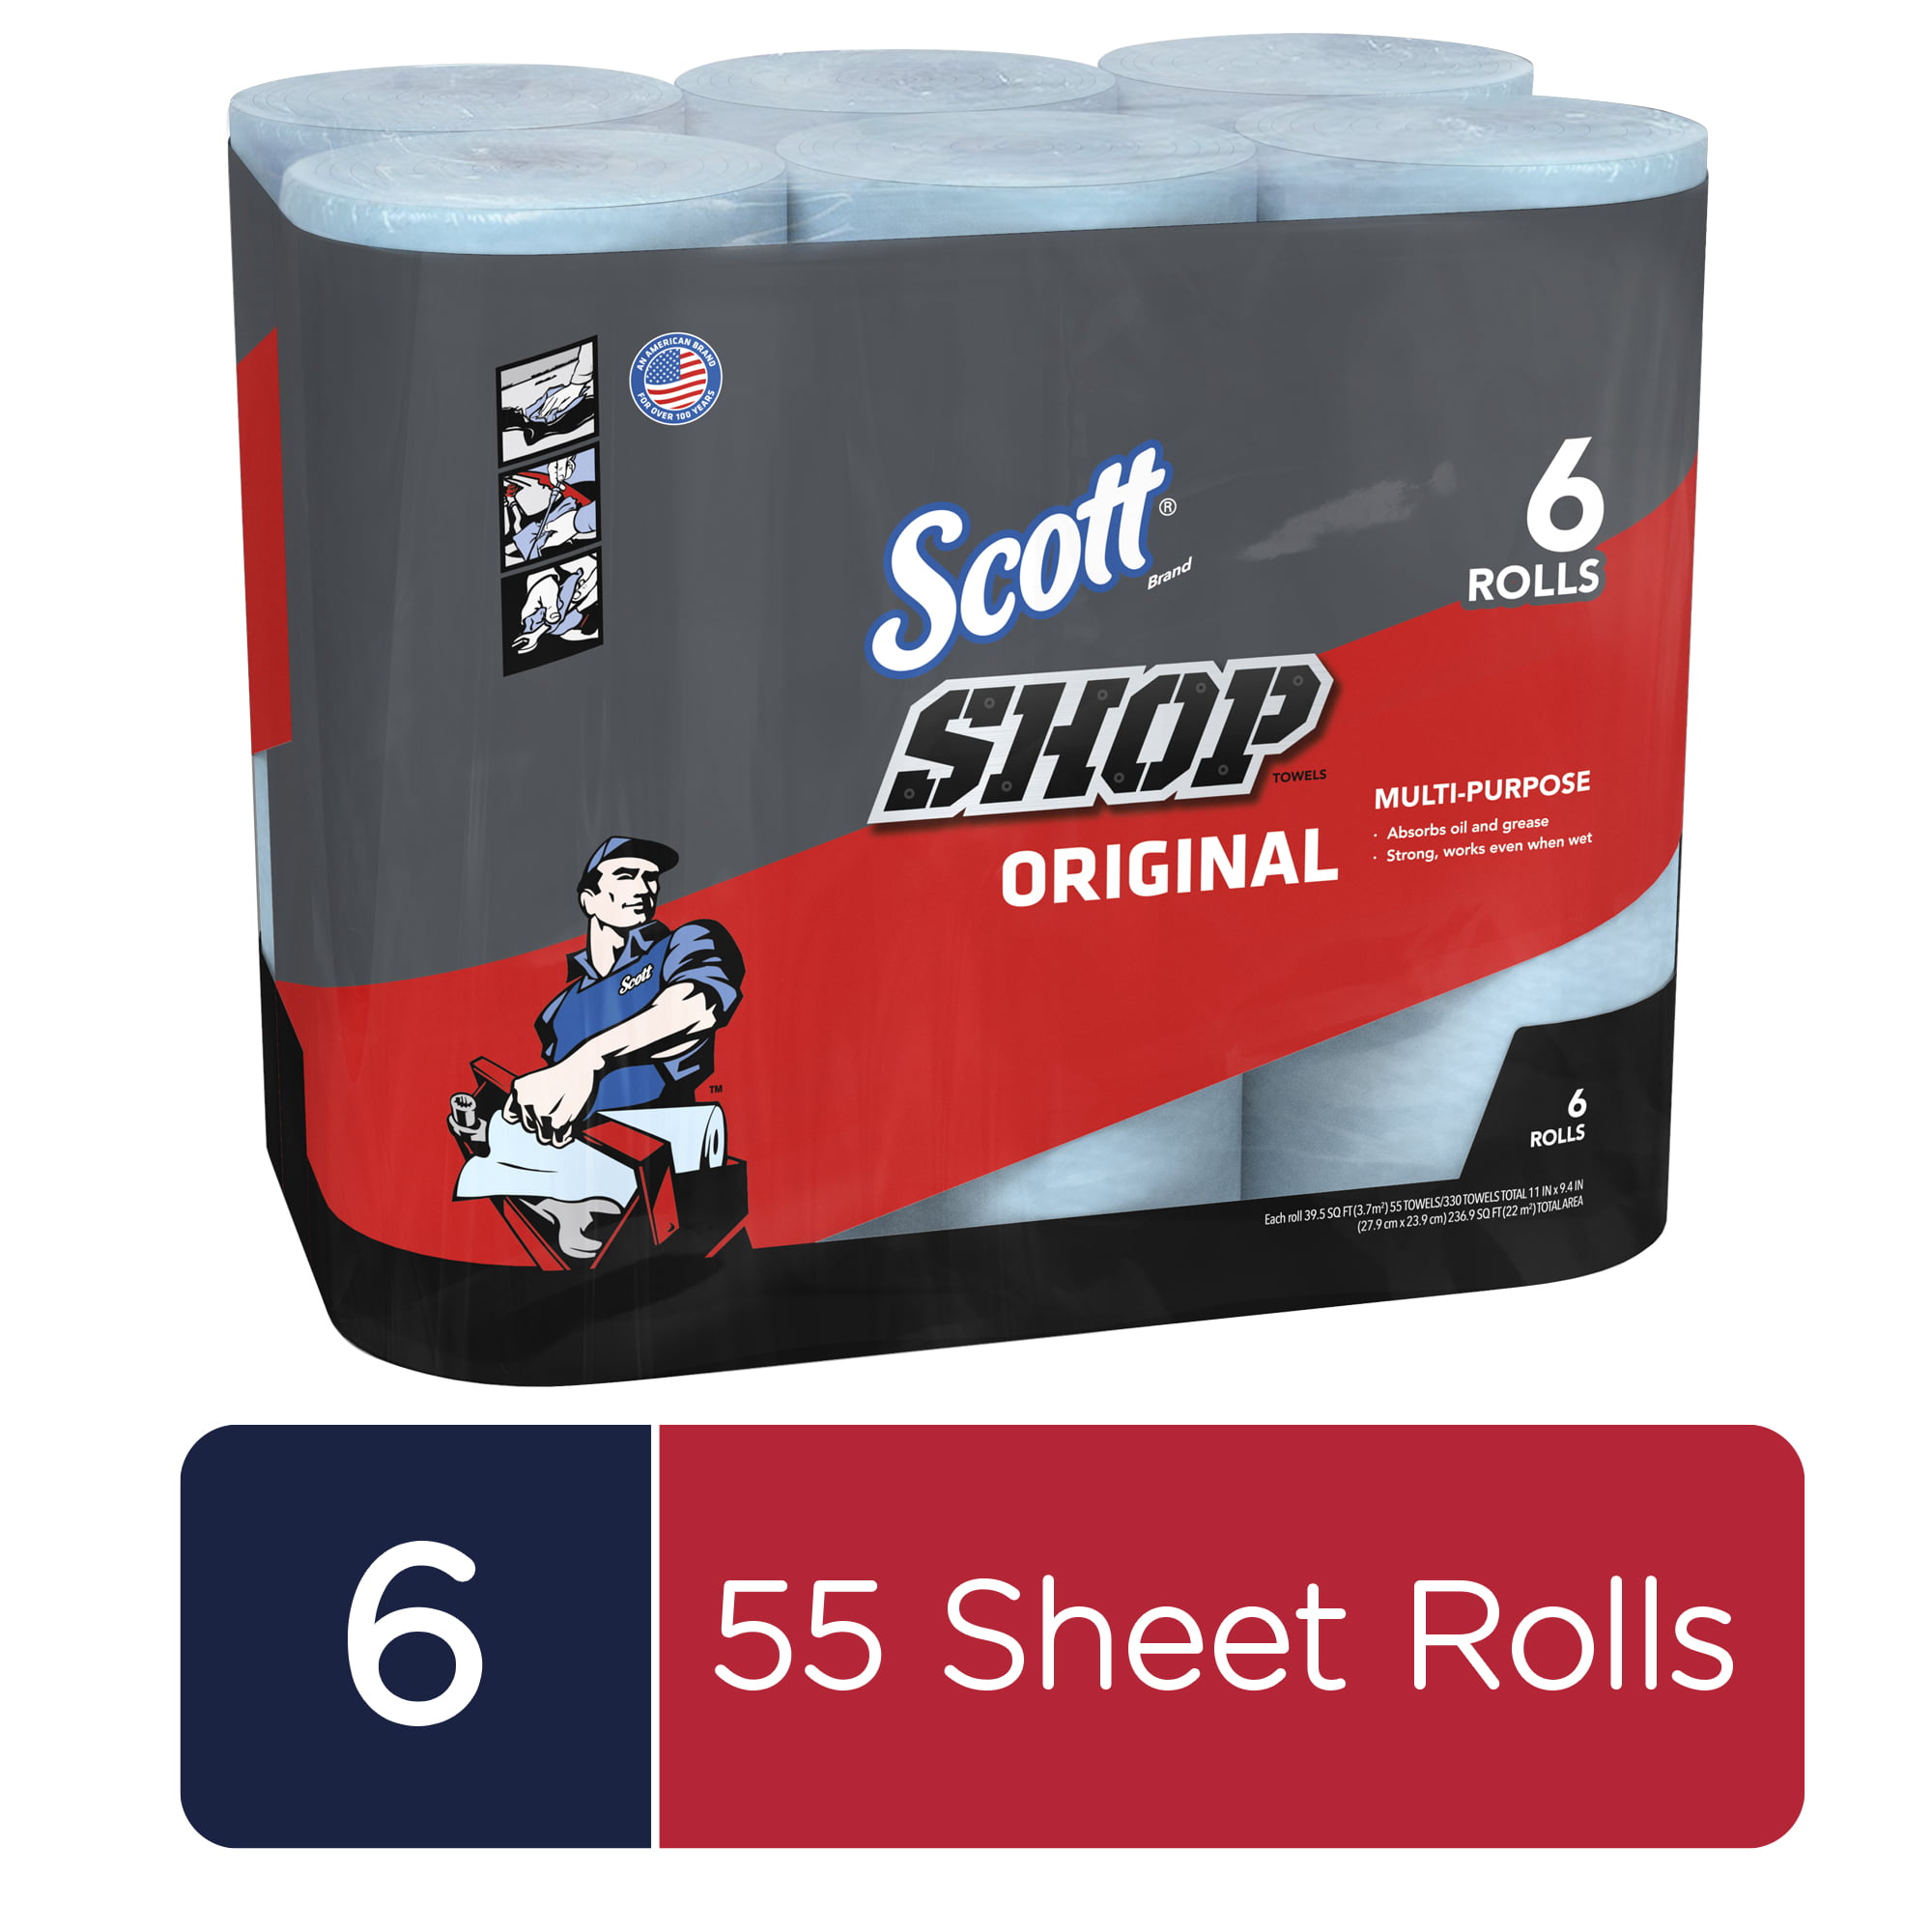 Scott Professional Multi-Purpose Shop Towels, 6 rolls $7.48